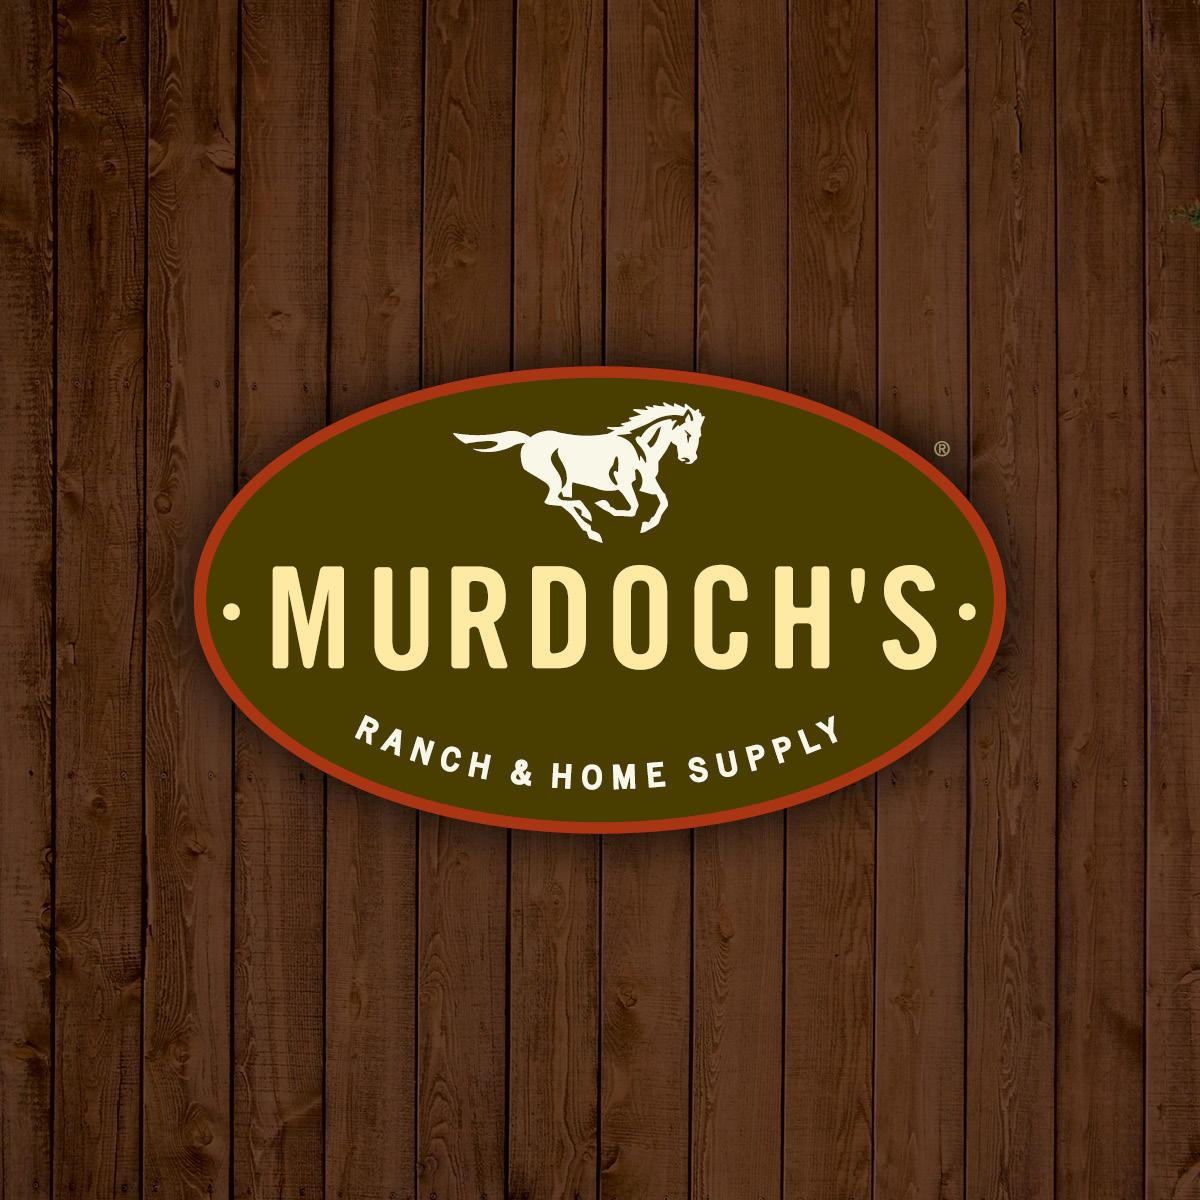 Murdoch's Ranch & Home Supply Fort Collins (970)692-5411